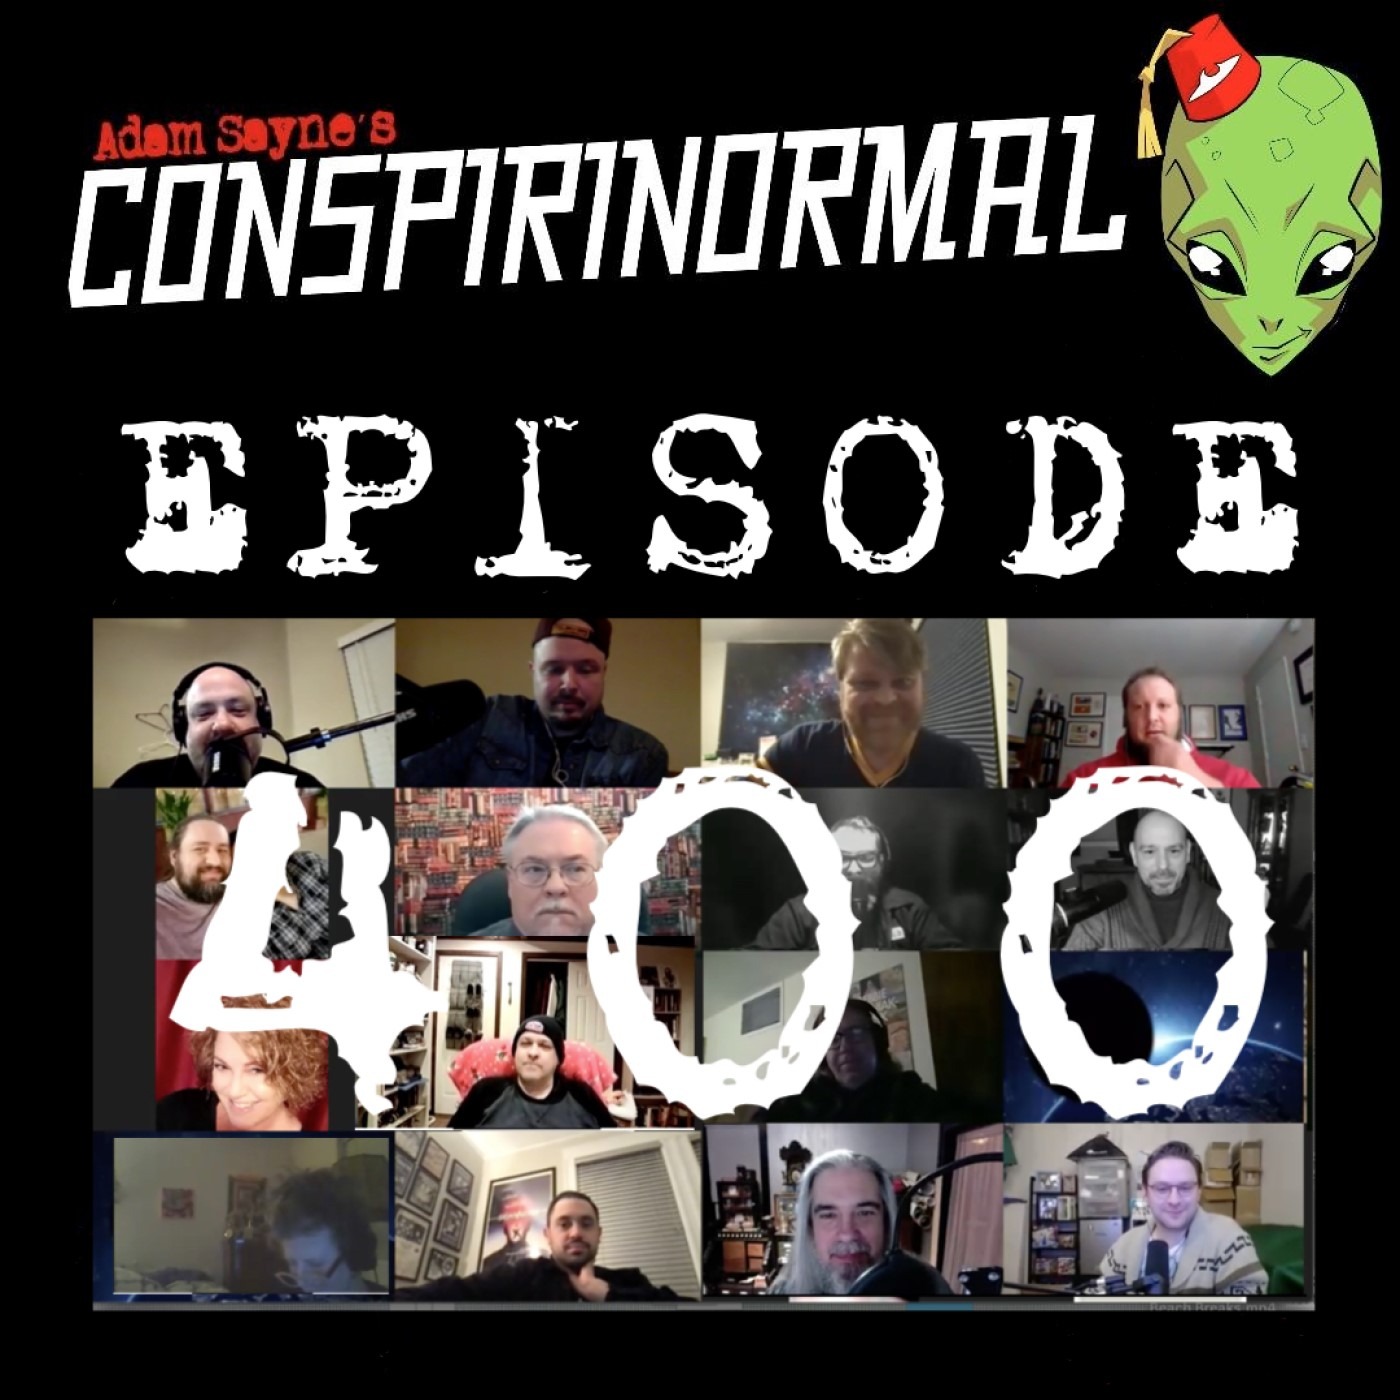 Conspirinormal 400- 400th Episode and Ten Year Anniversary Bash!